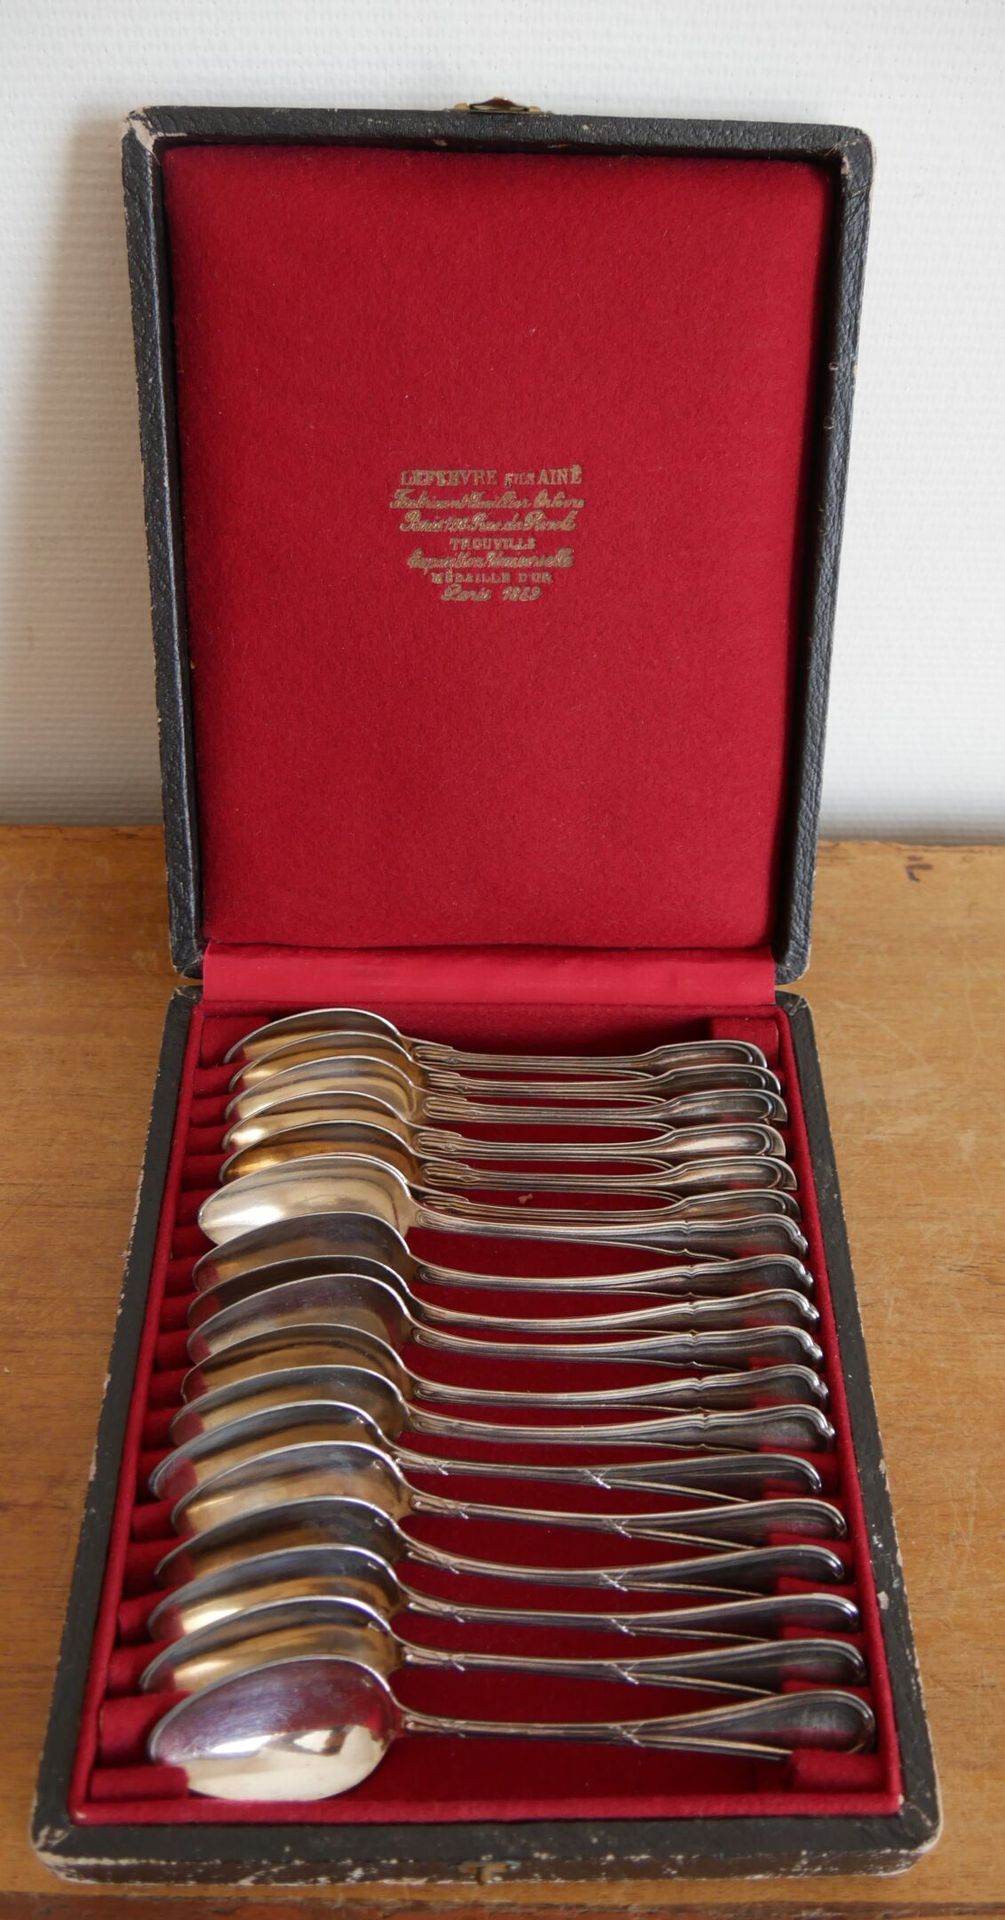 Null 12 cucchiaini in argento 925 millesimi, modello "net".

Peso lordo: 237,5 g&hellip;